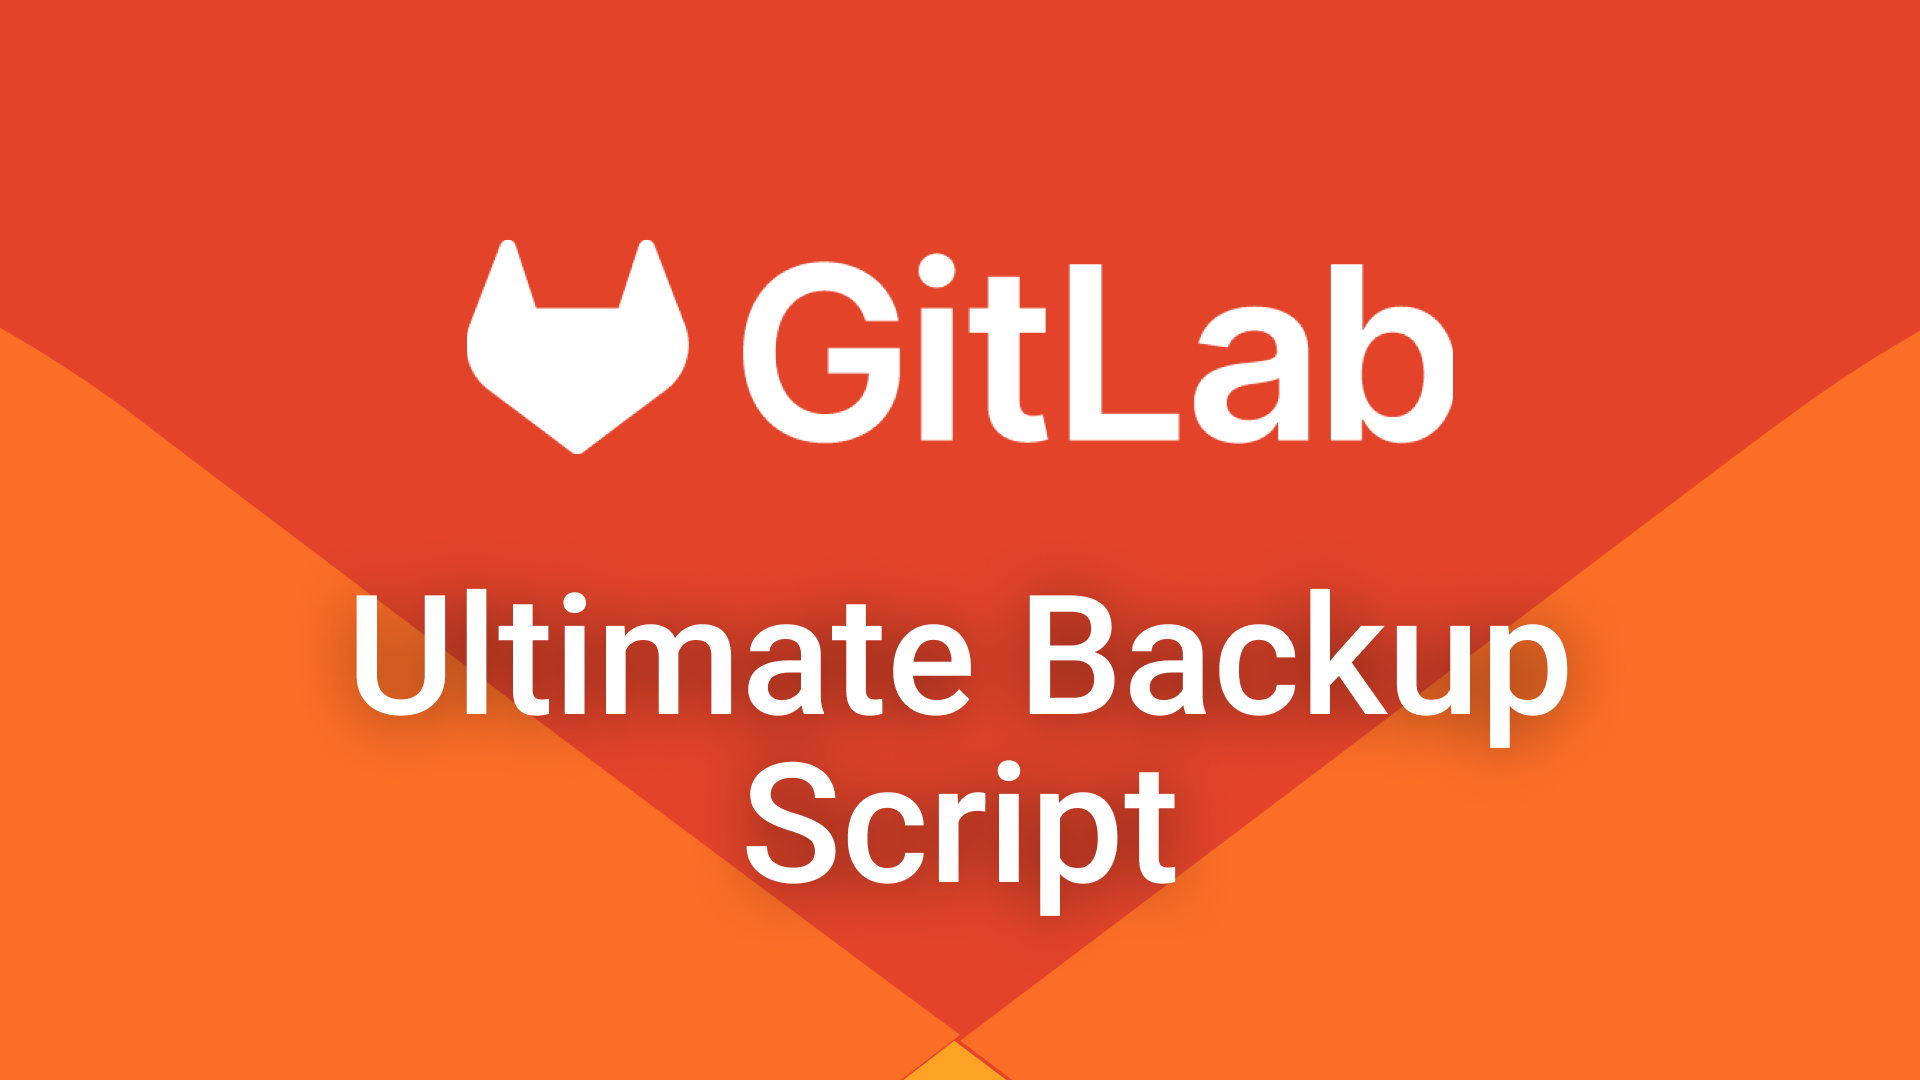 The Ultimate GitLab Backup Script